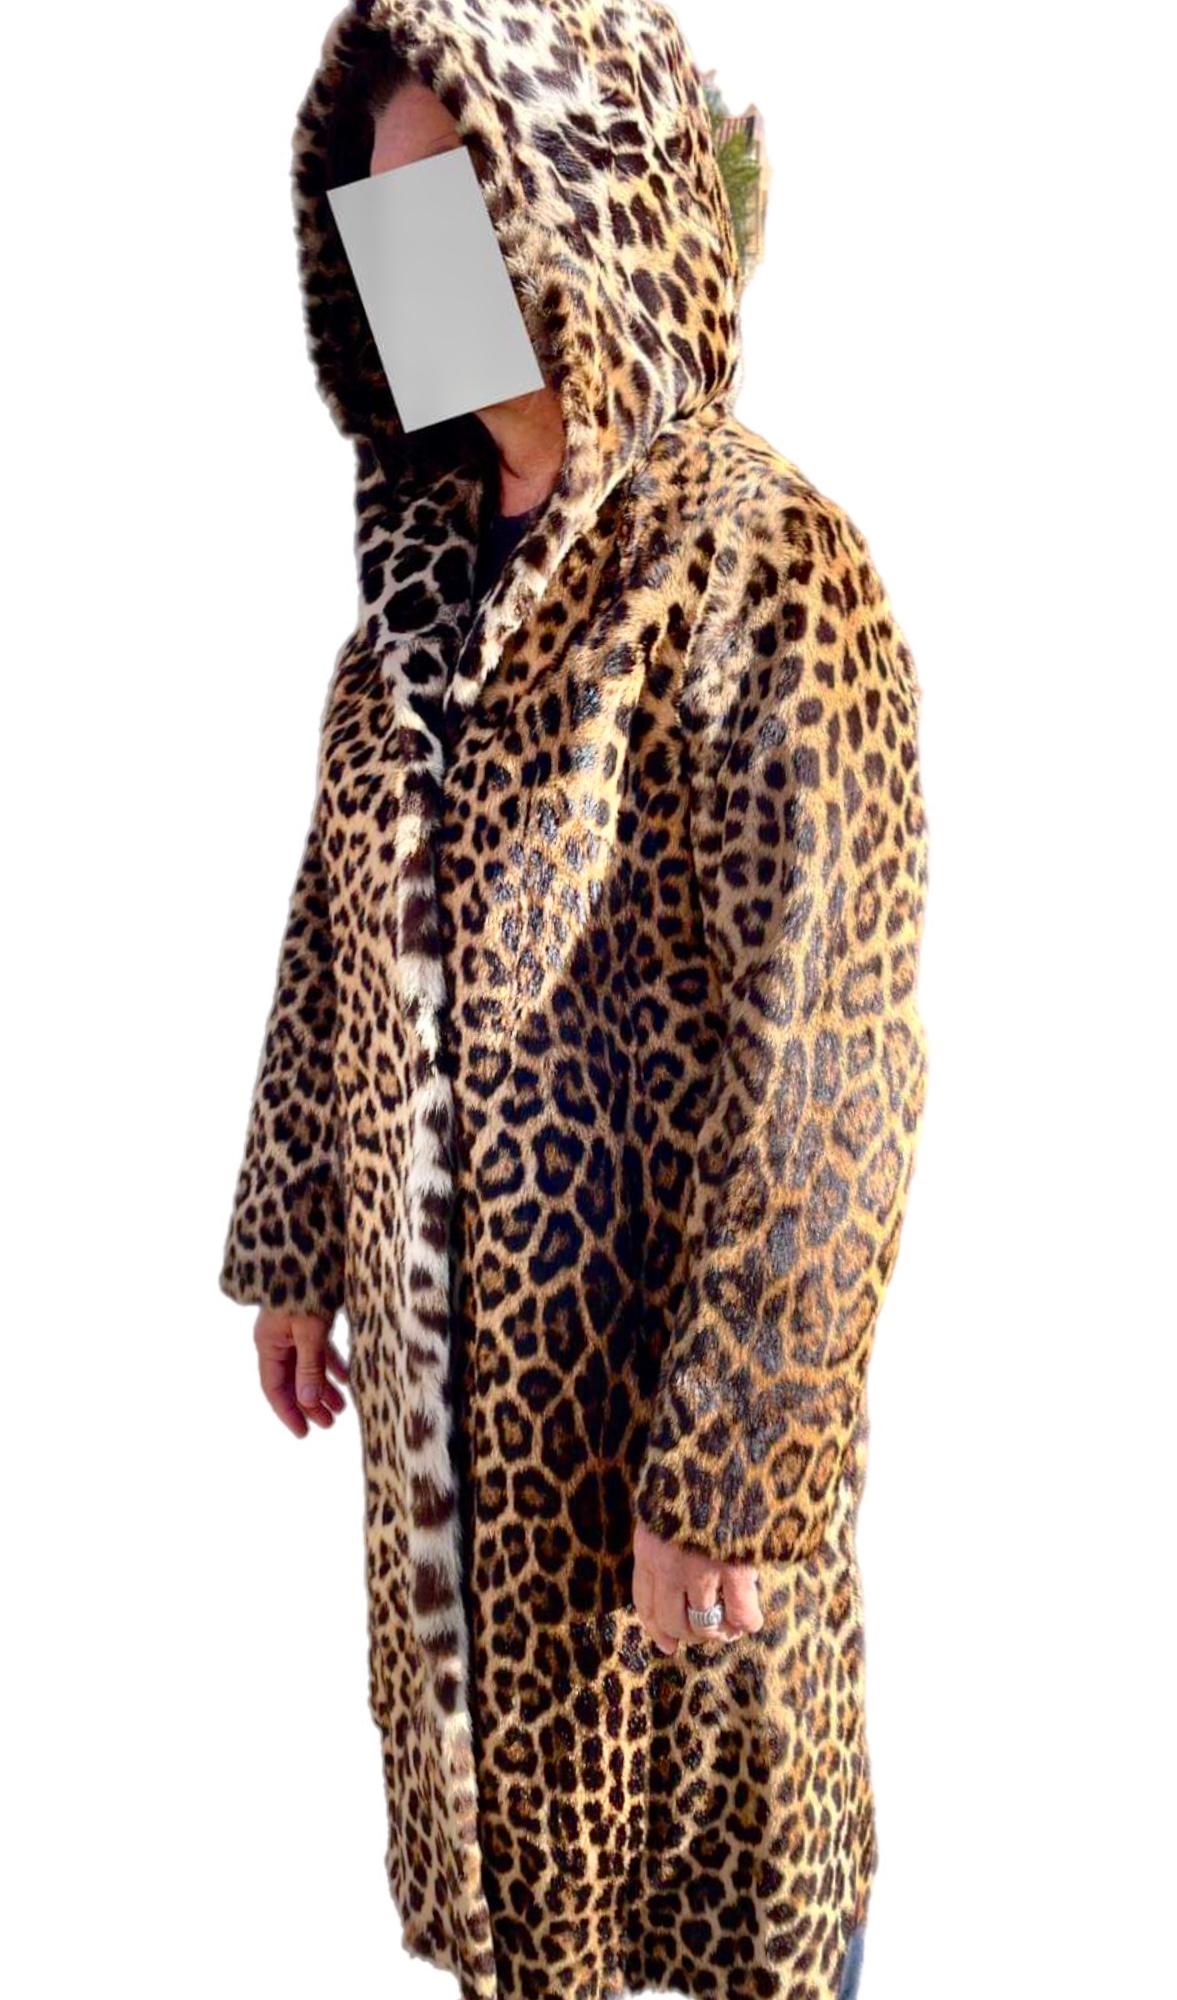 PRODUCT DESCRIPTION:

Vintage leopard fur coat size 12

Condition: Mint condition

Closure: Metal clasp

Color: Orange brown and black

Material: Fur

Garment type: leopard fur coat 

Sleeves: Straight

Pockets: Slit pockets

Collar: